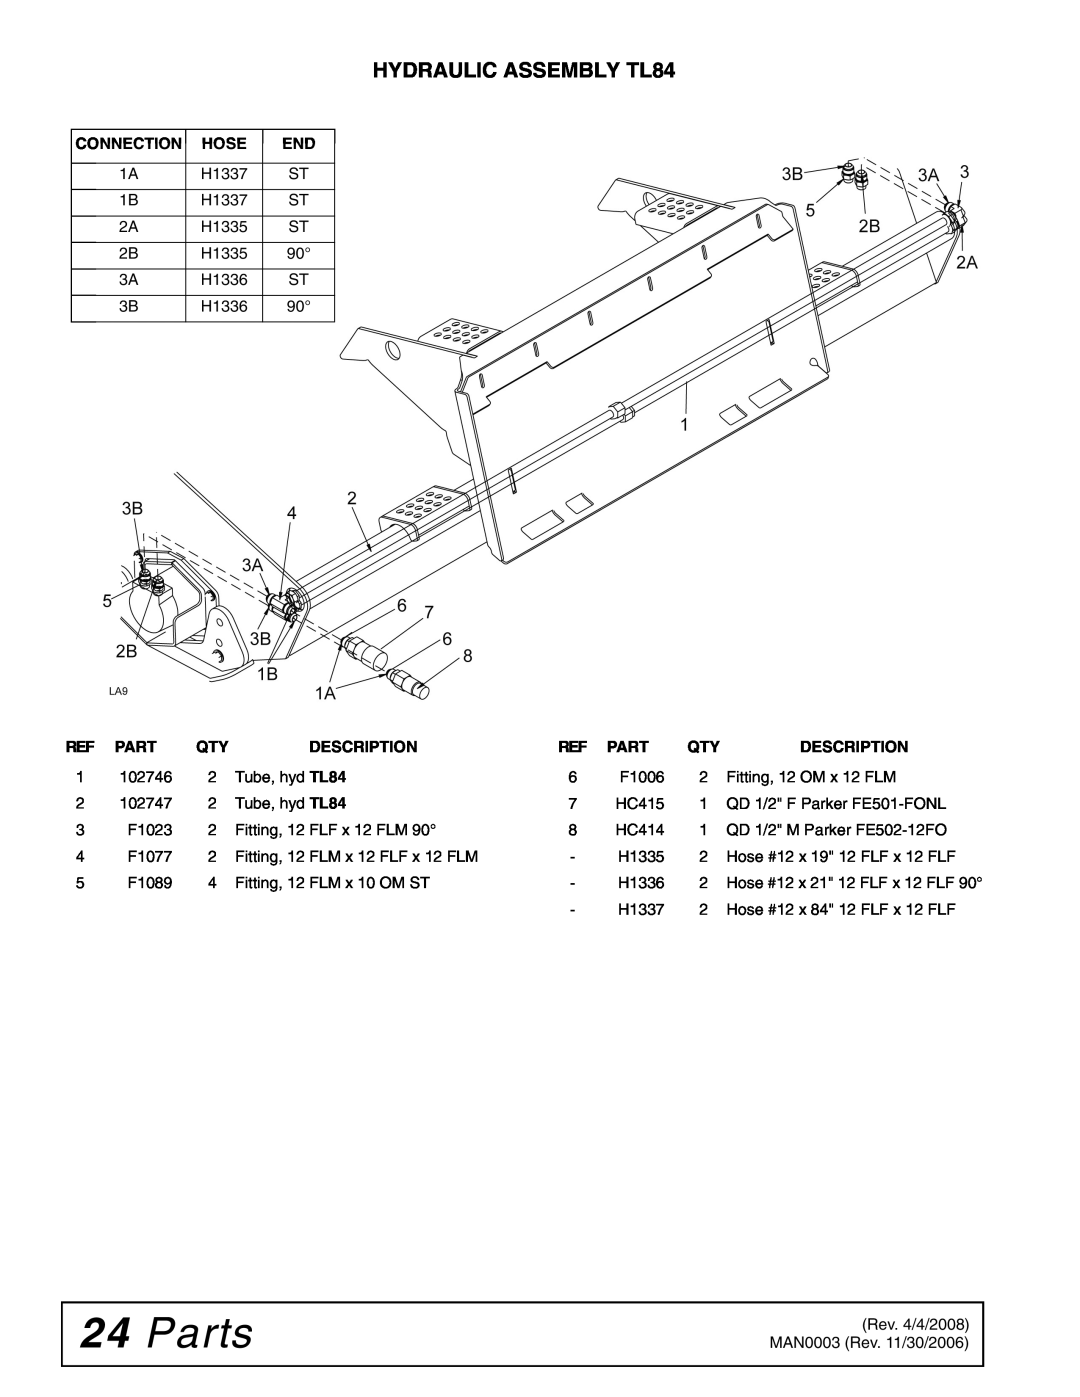 Woods Equipment TL52, TL73 manual Parts, HYDRAULIC ASSEMBLY TL84 